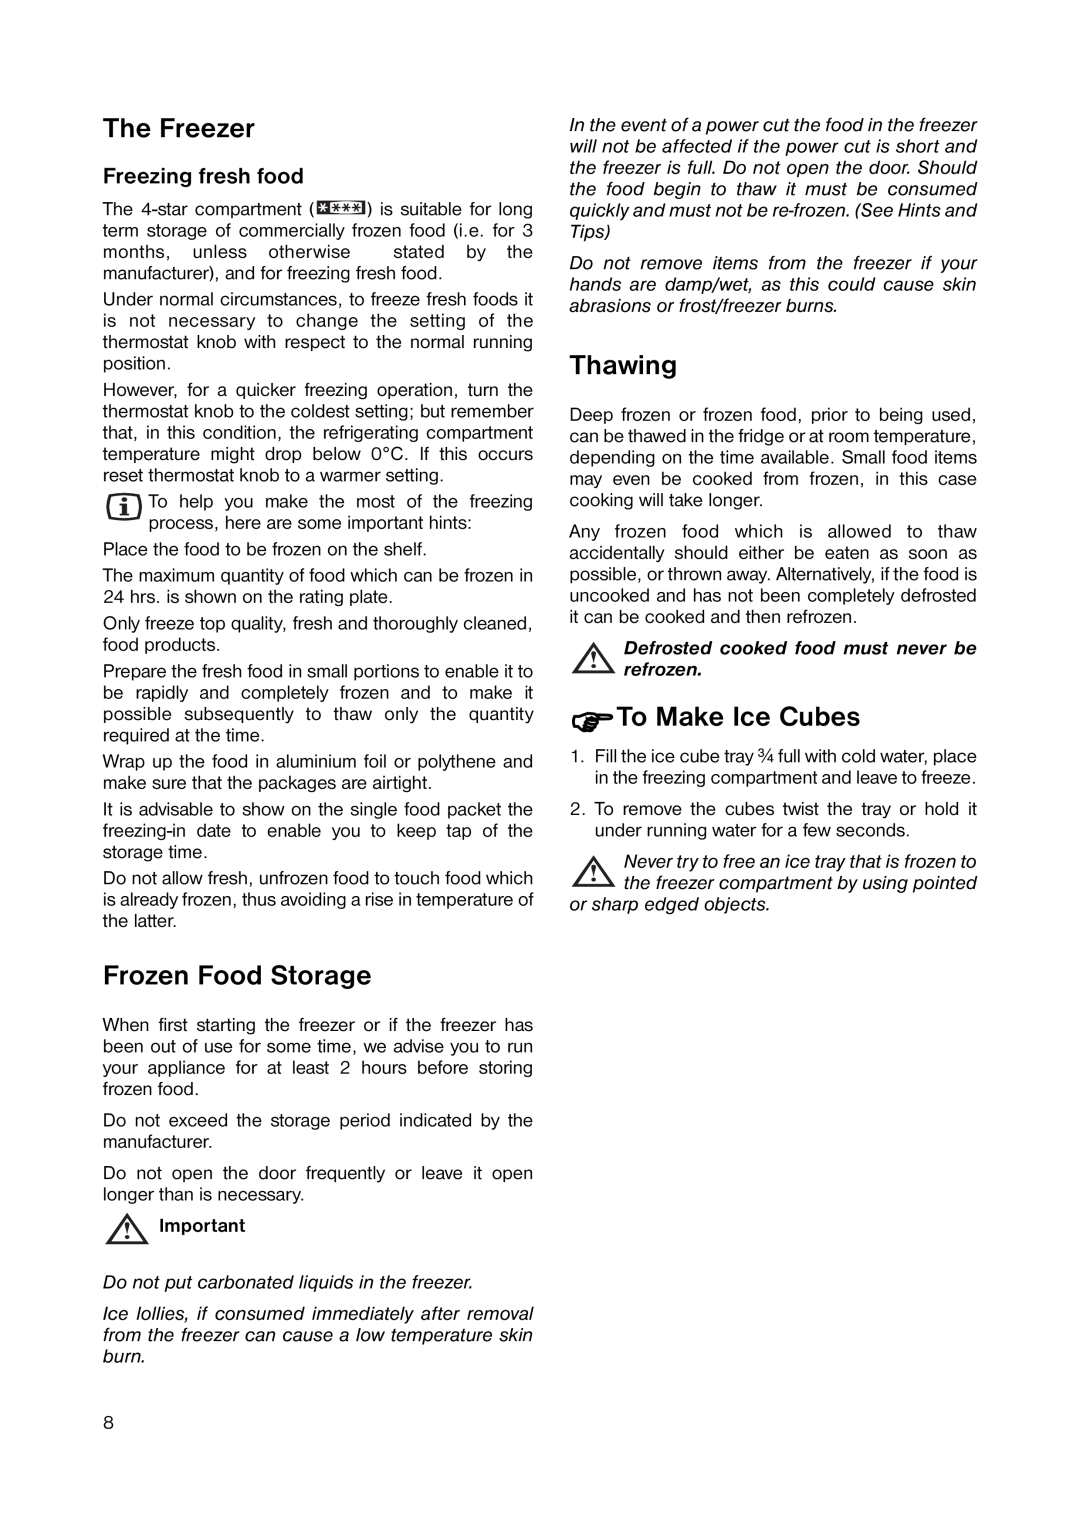 Zanussi ZRD 1845 manual The Freezer, Frozen Food Storage, Thawing, To Make Ice Cubes, Freezing fresh food 